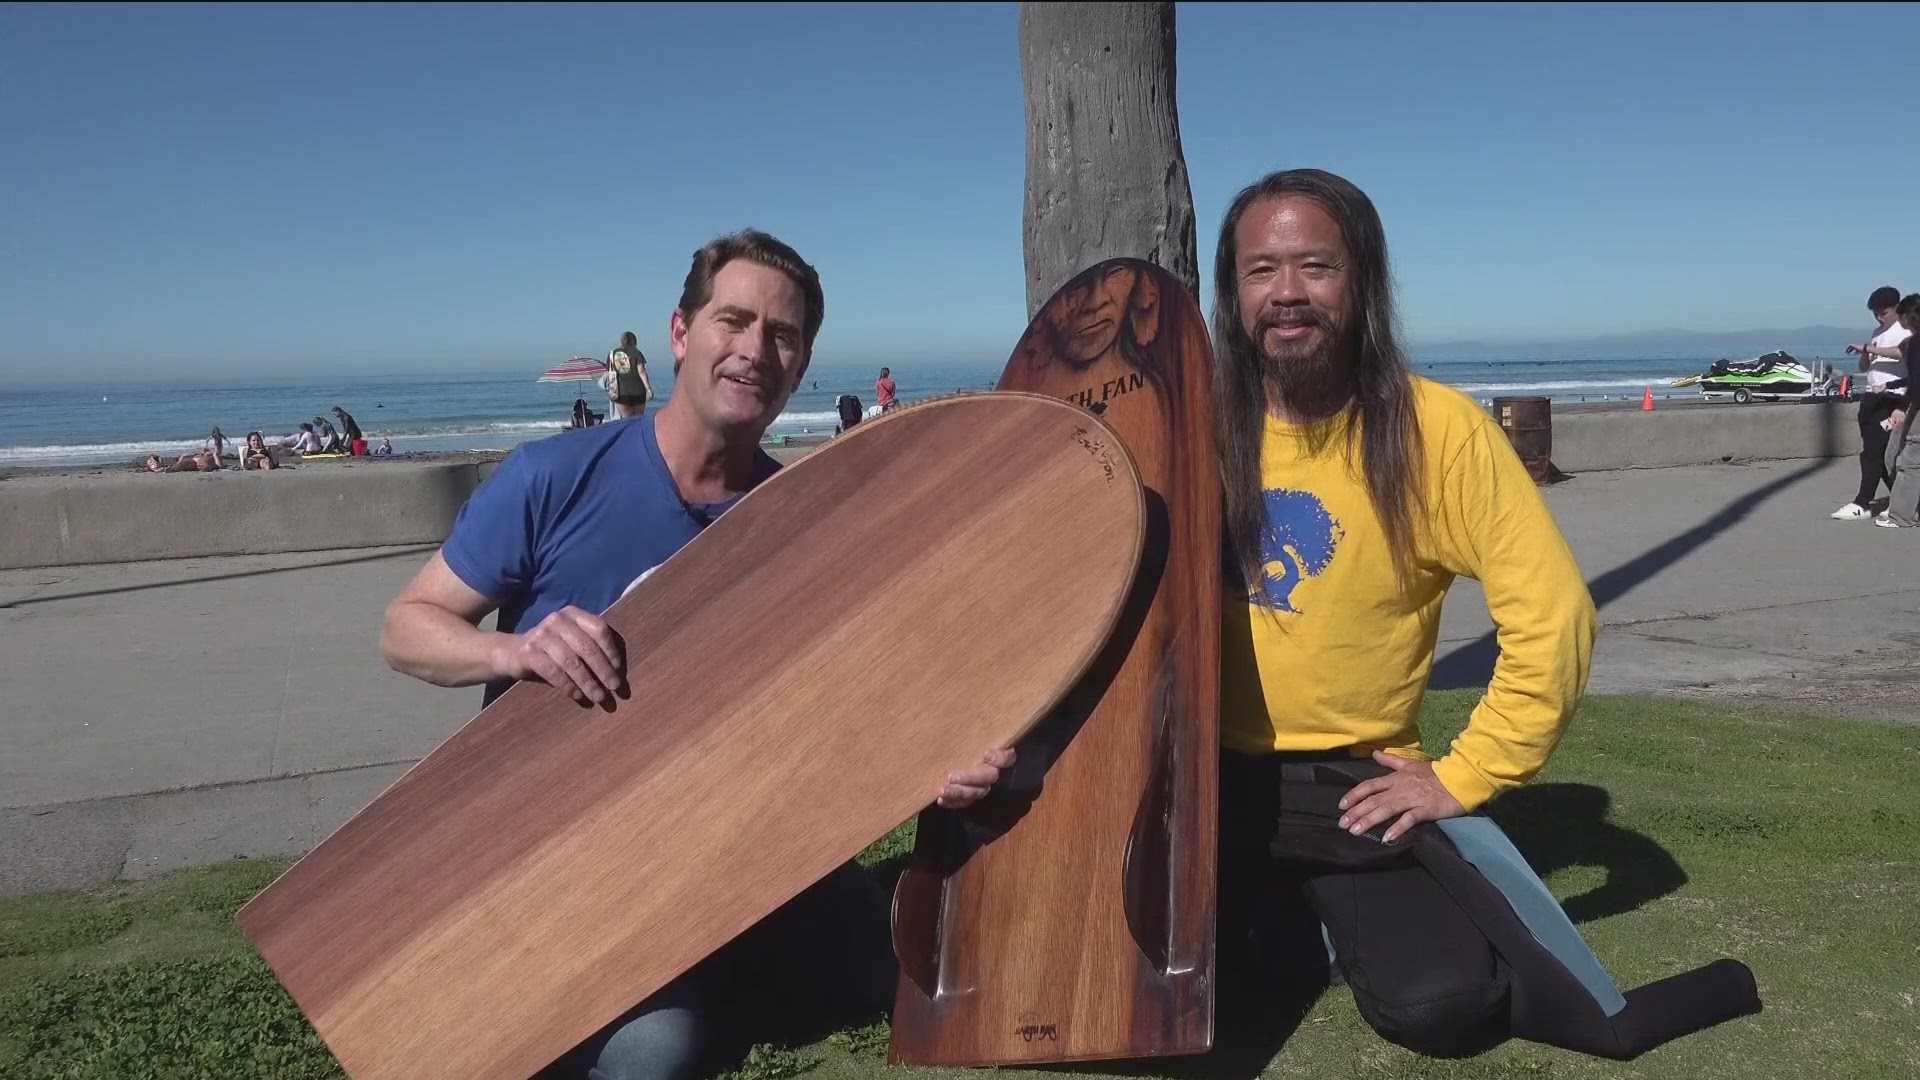 Earth Fan Surf Company makes eco-friendly wooden boards instead of using foam that often litter the beach.